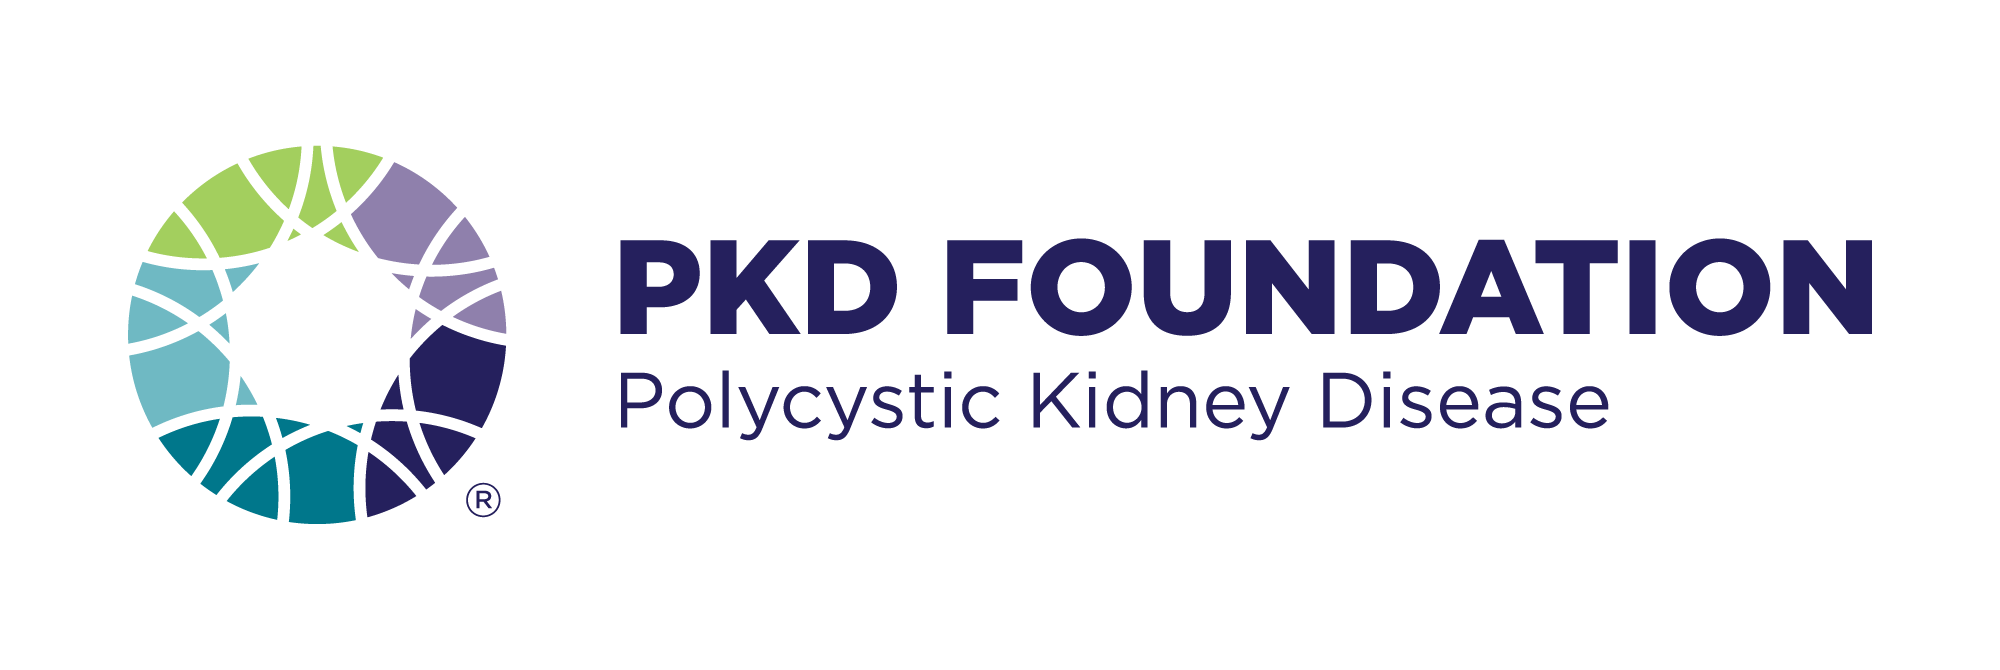 PKD Foundation logo full color